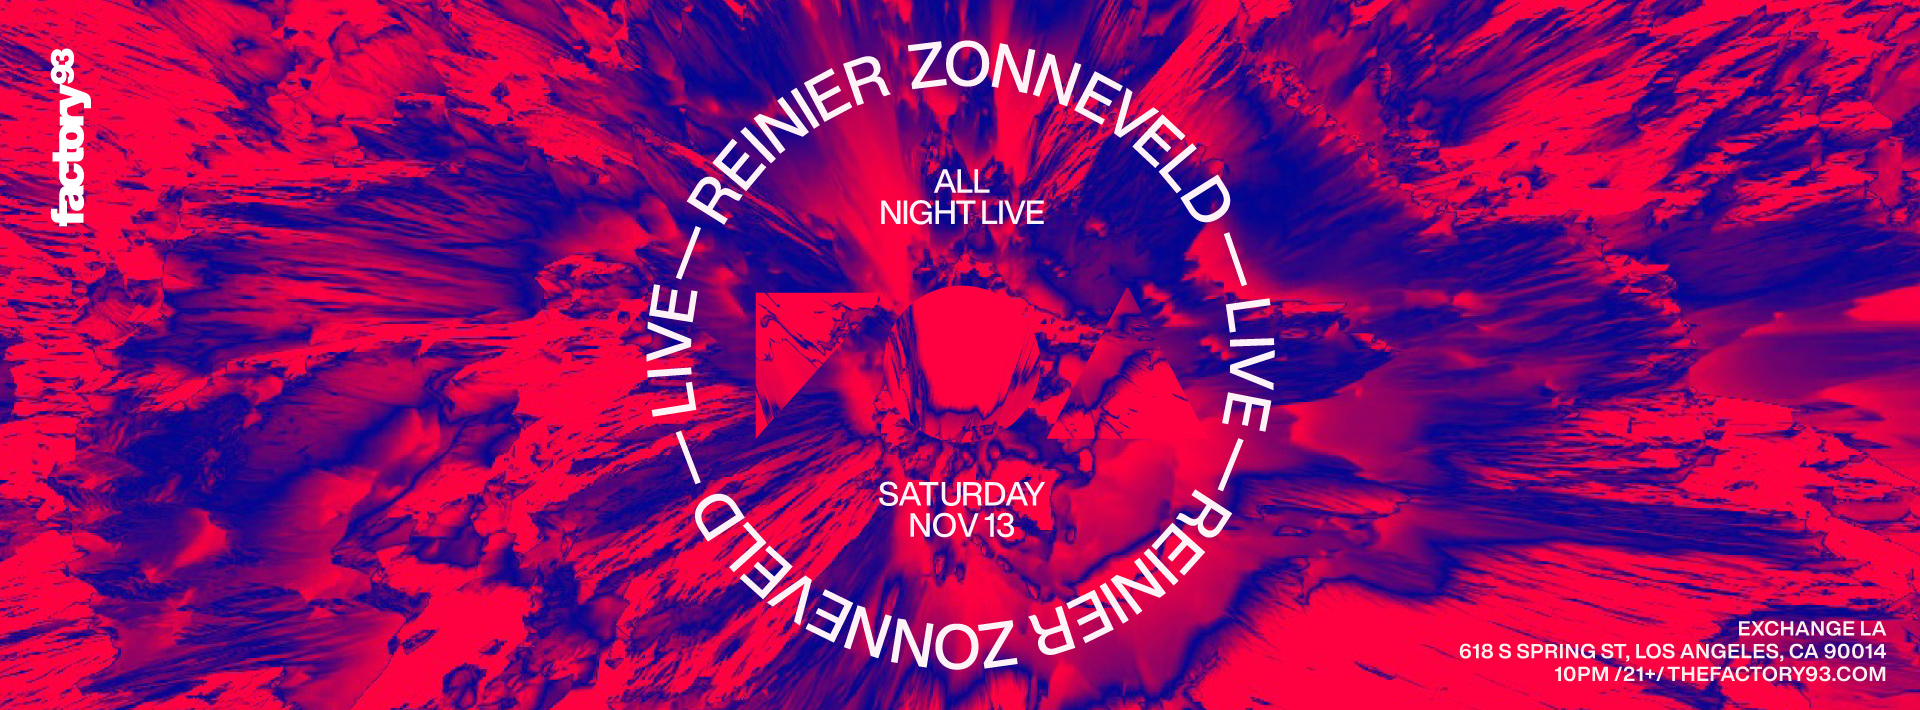 Reinier Zonneveld (All Night Live)